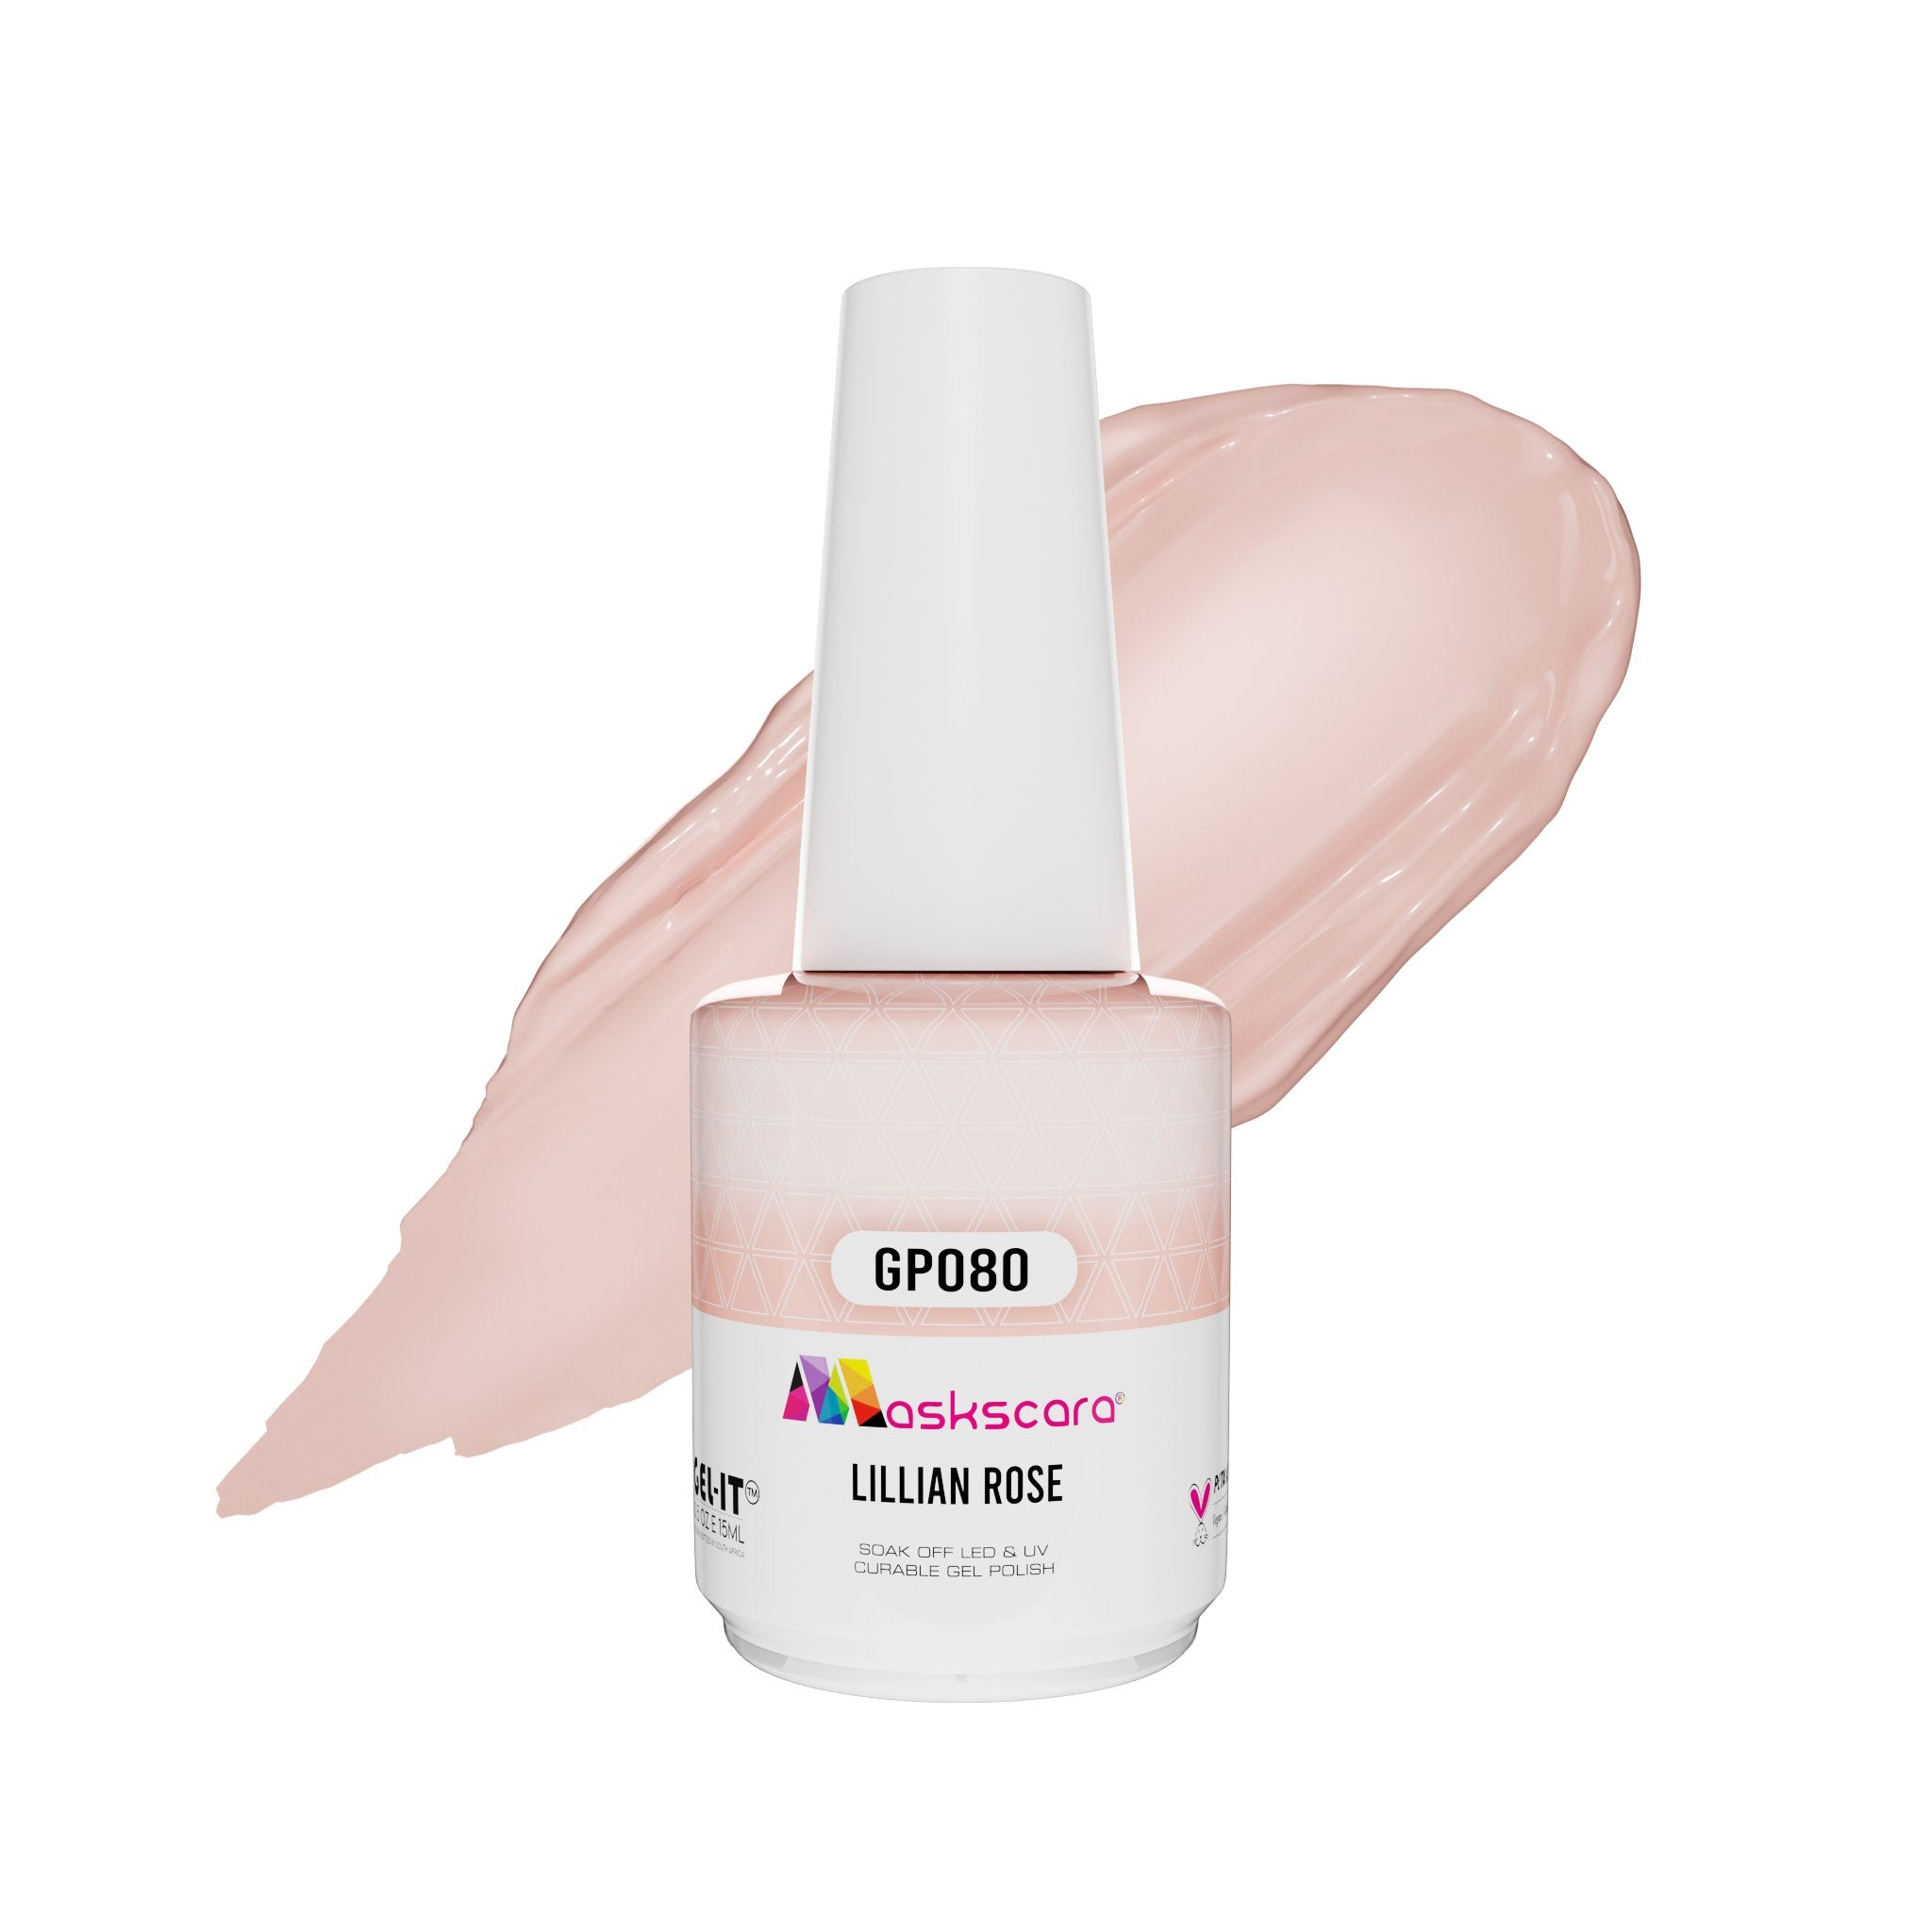 <img scr = “ GP080 Lilian Rose.jpeg” alt = “French Nude gel polish colour by the brand Maskscara”>